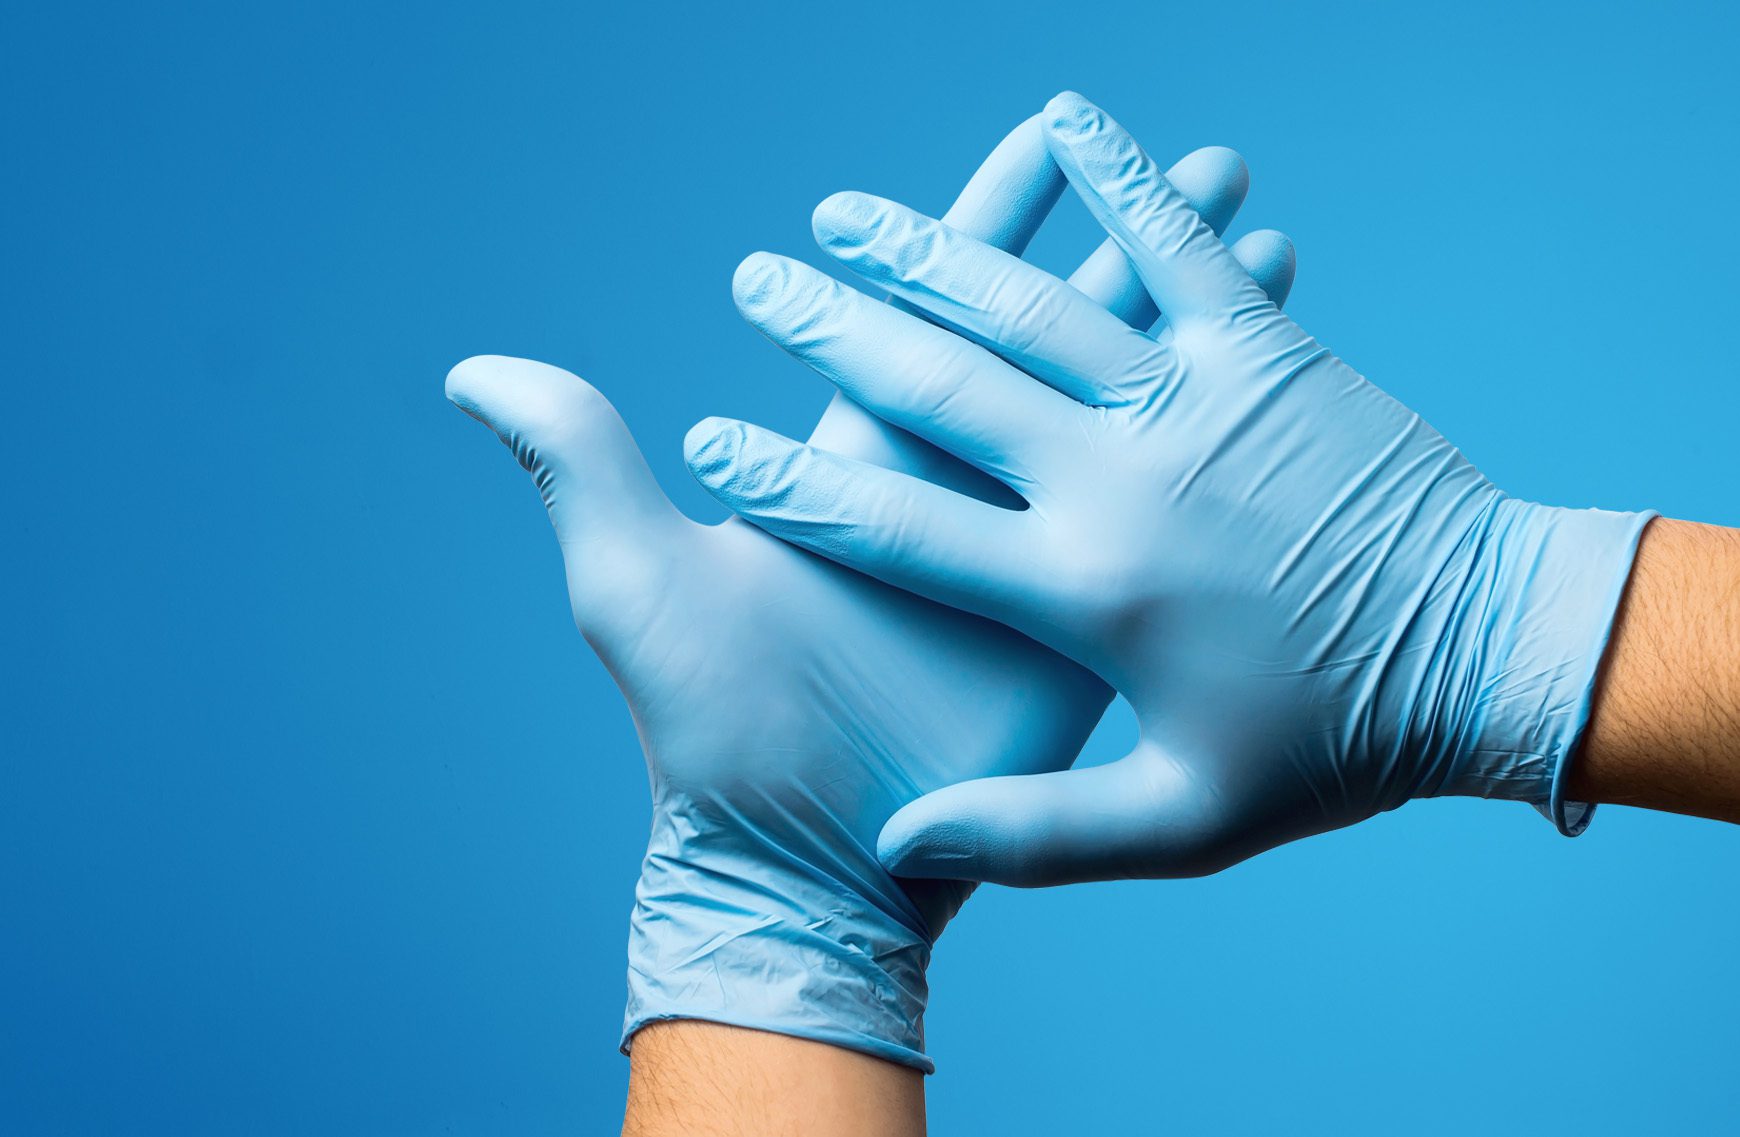 Hands wearing nitrile vinyl gloves against plain blue background